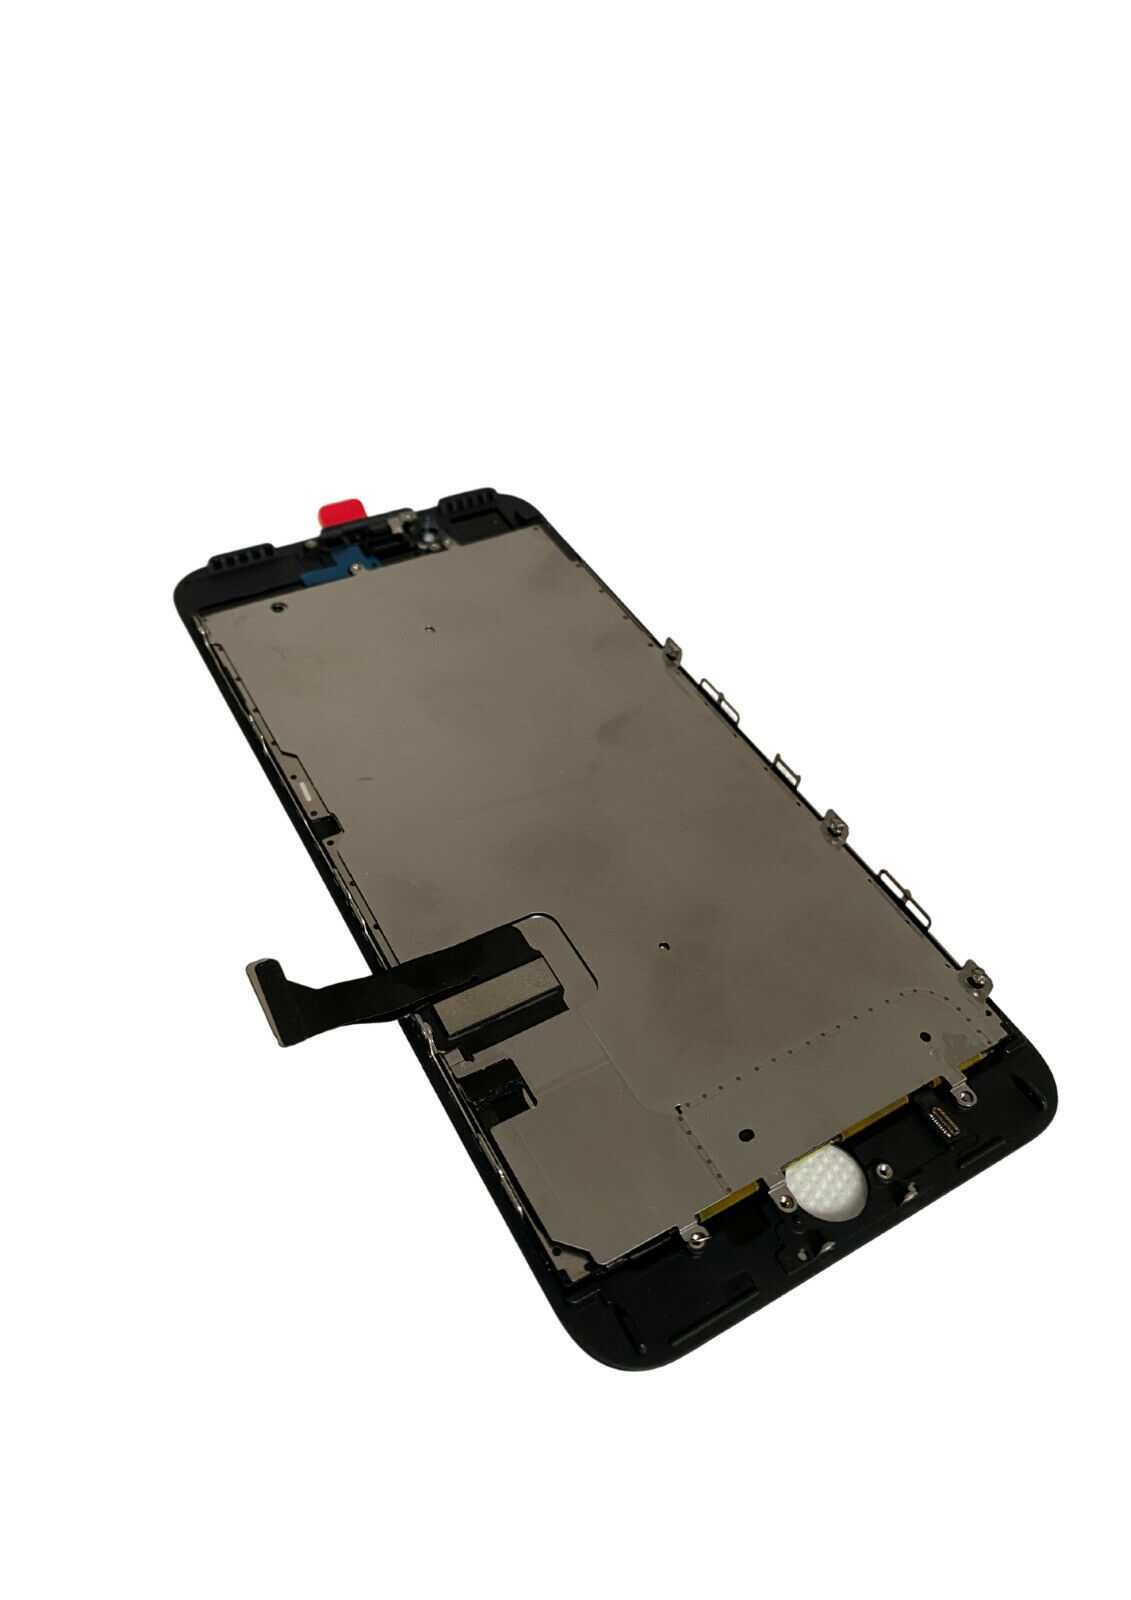  Display LCD iPhone 7 Preto NOVO + Ferramentas